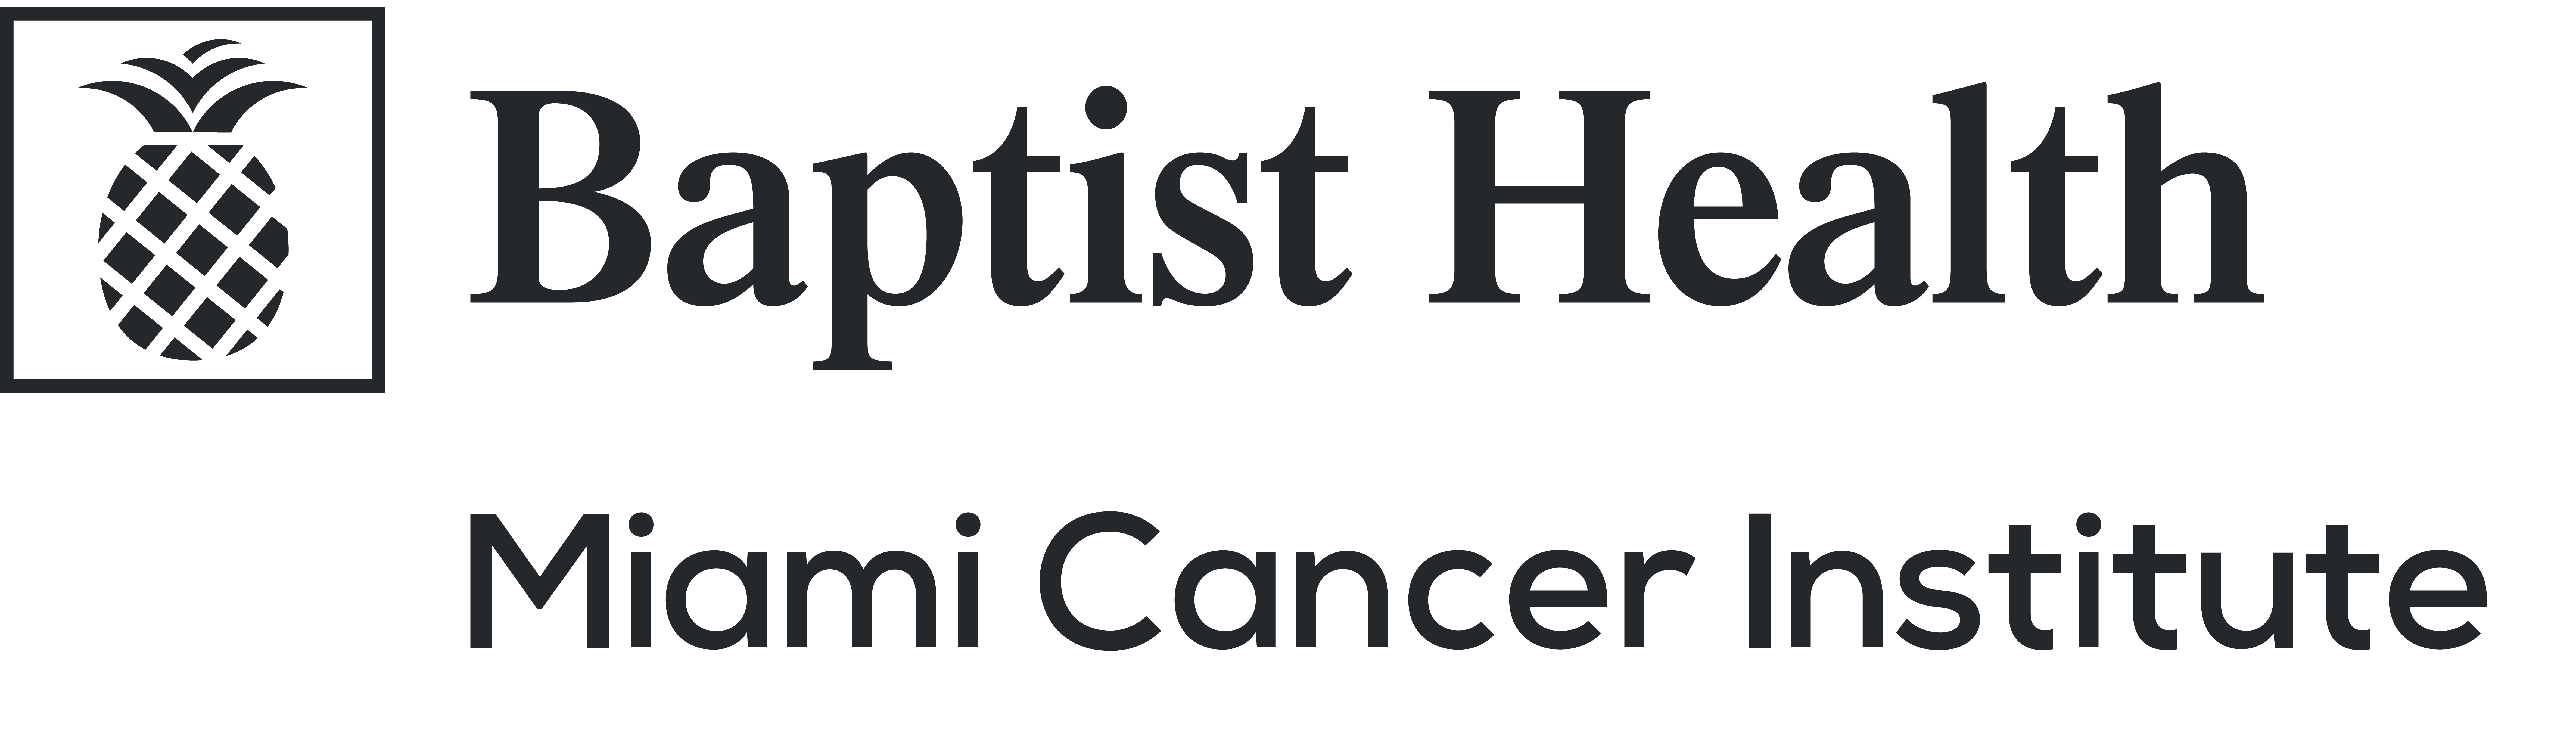 Baptist Health Miami Cancer Institute